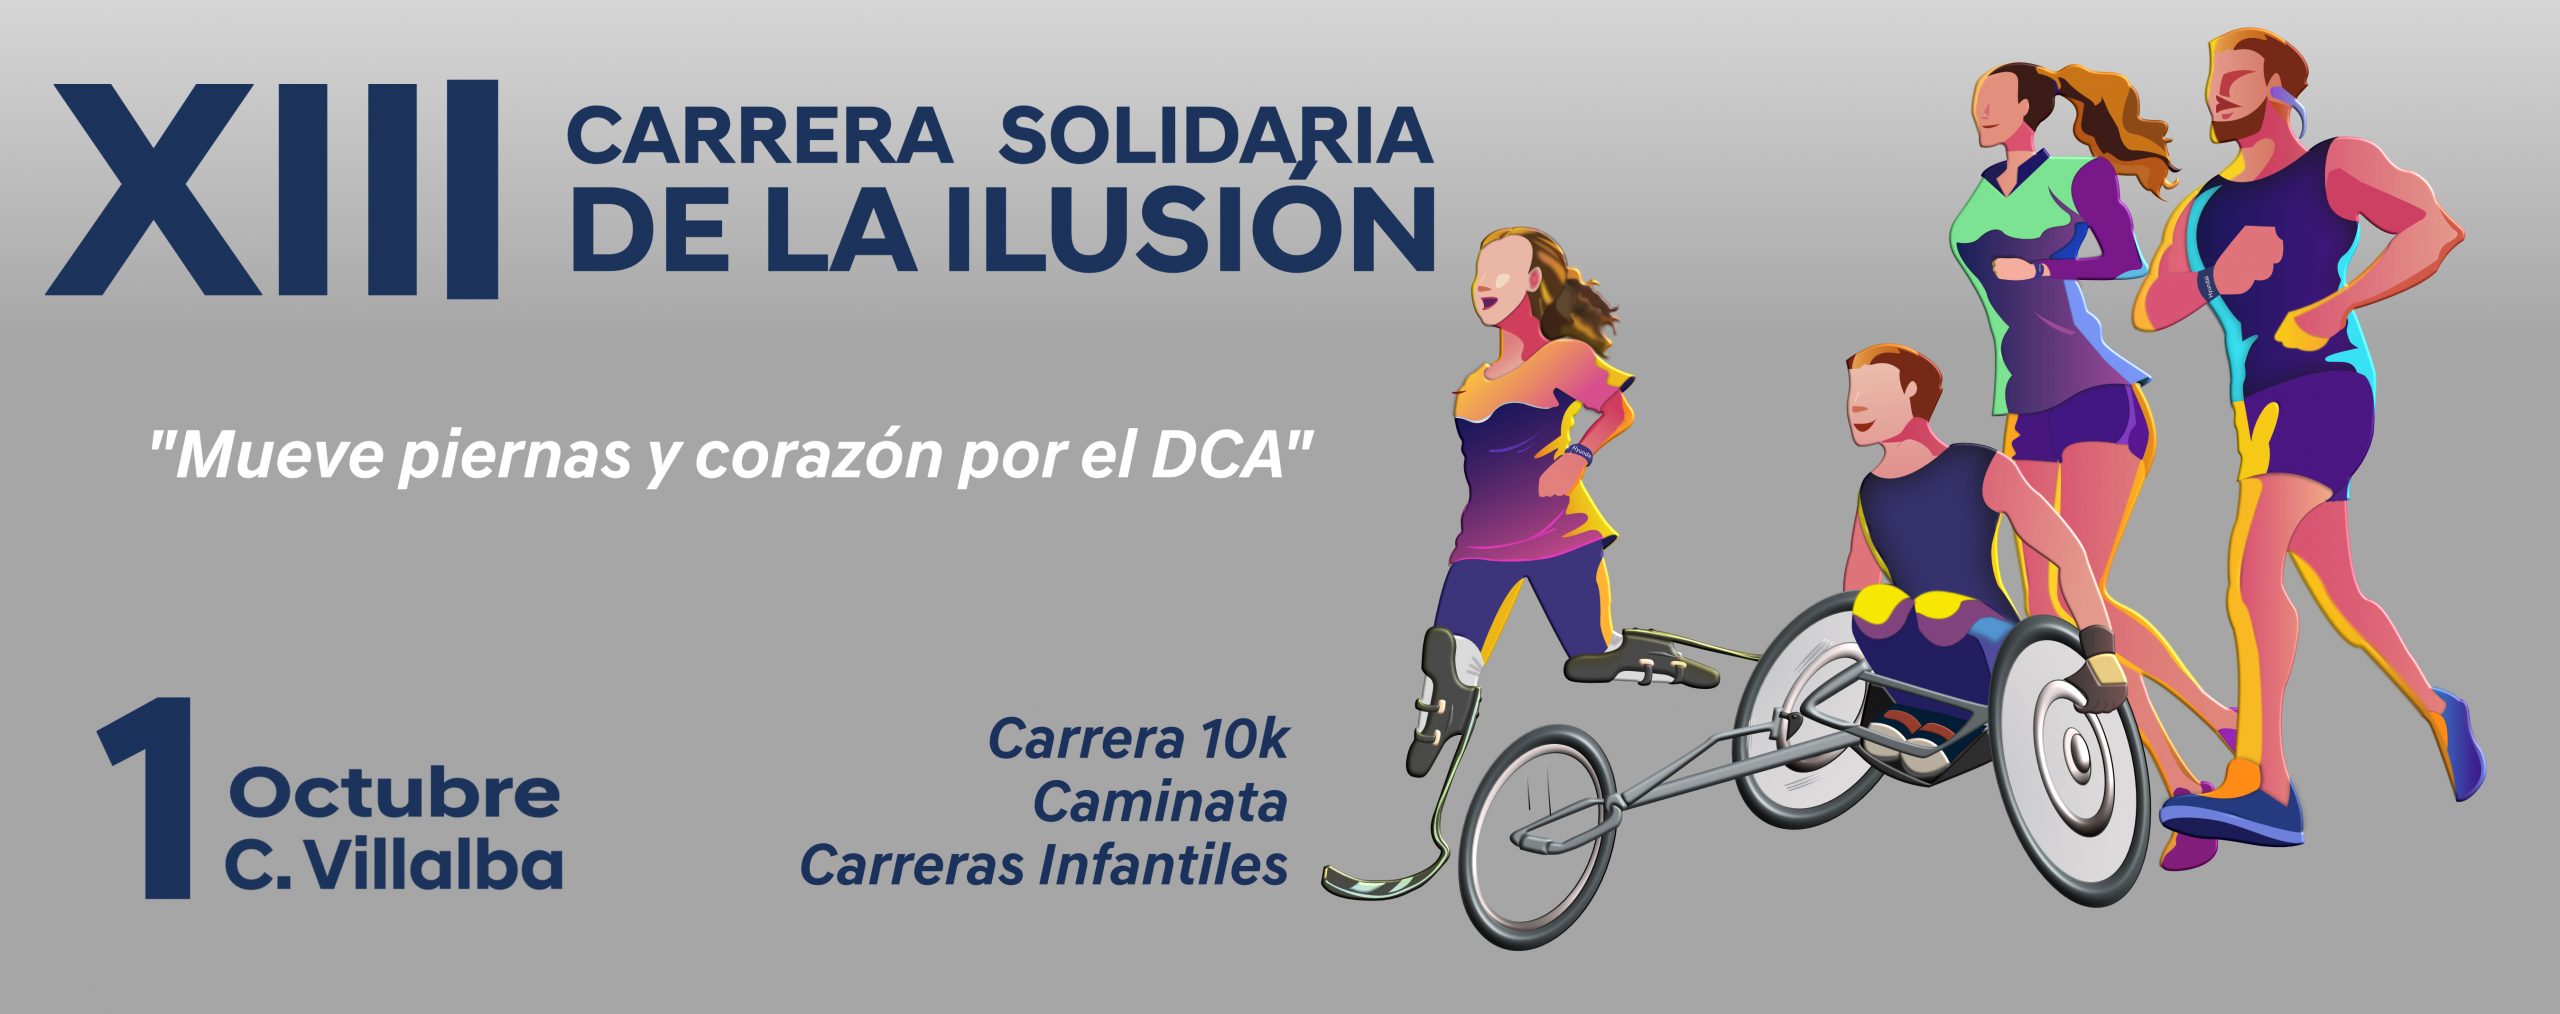 Carrera Solidaria de la Ilusin logo